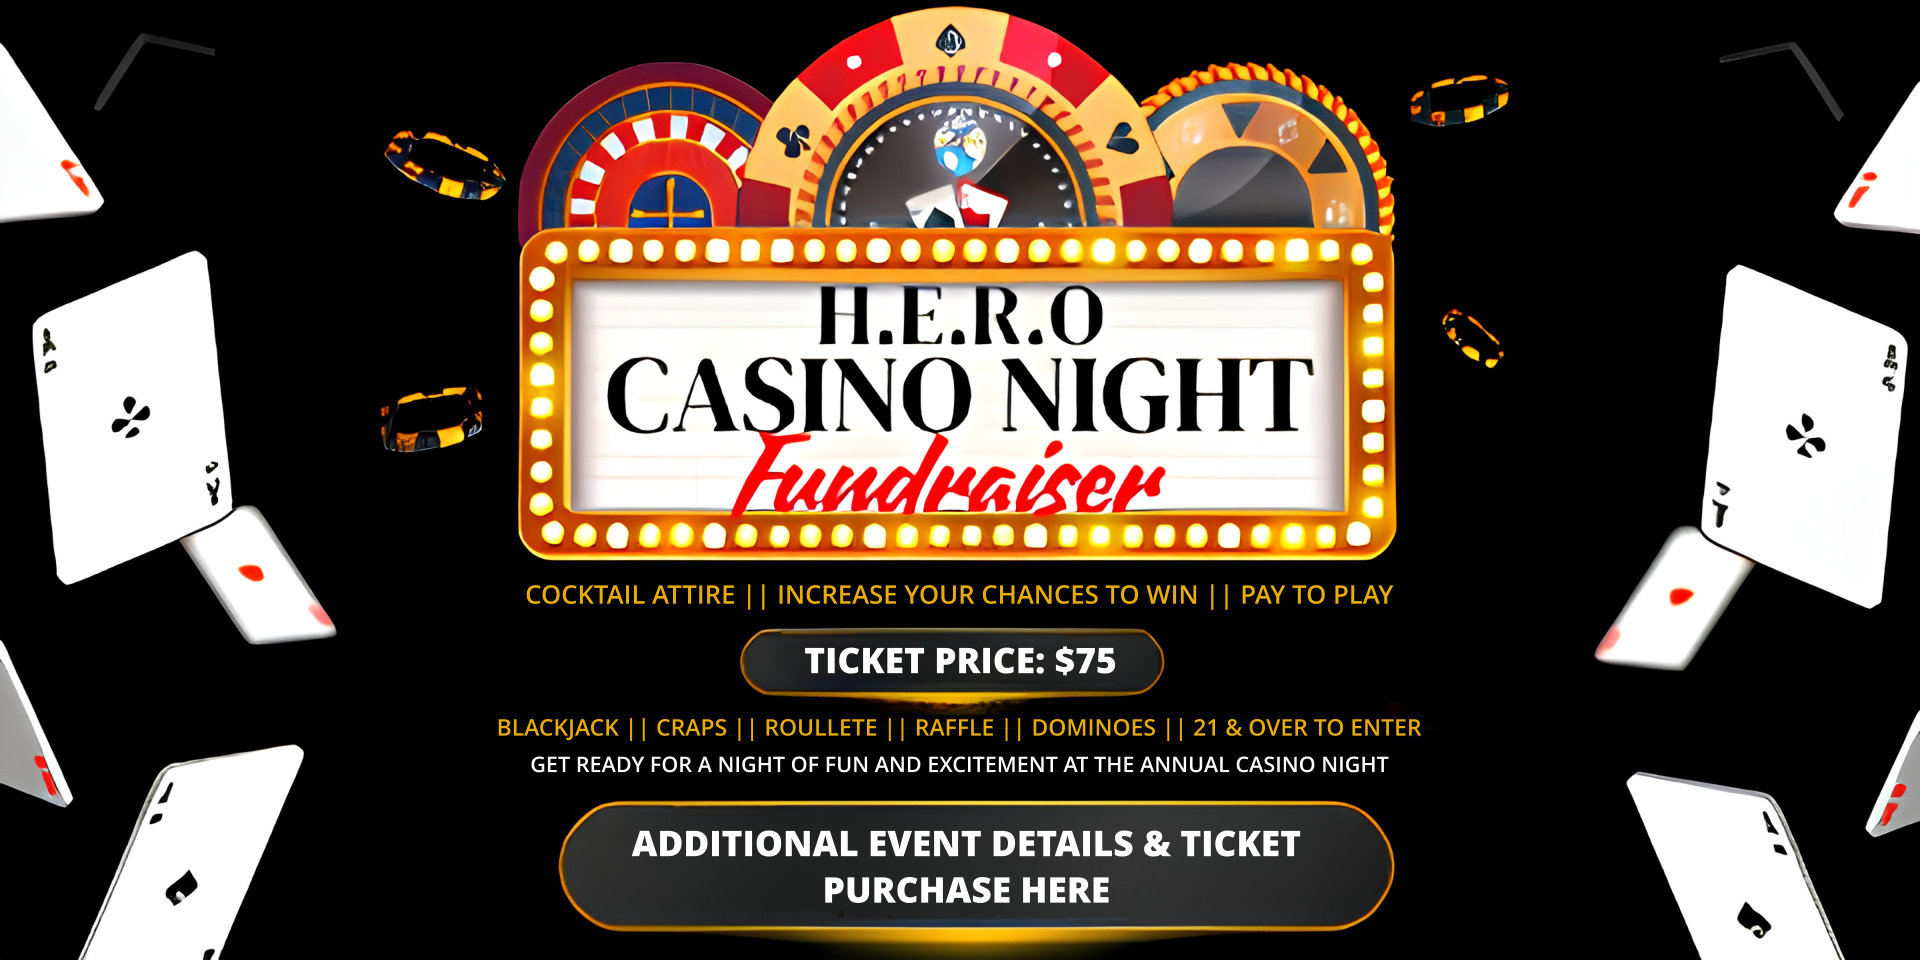 H.E.R.O Casino Night Fundraiser flyer